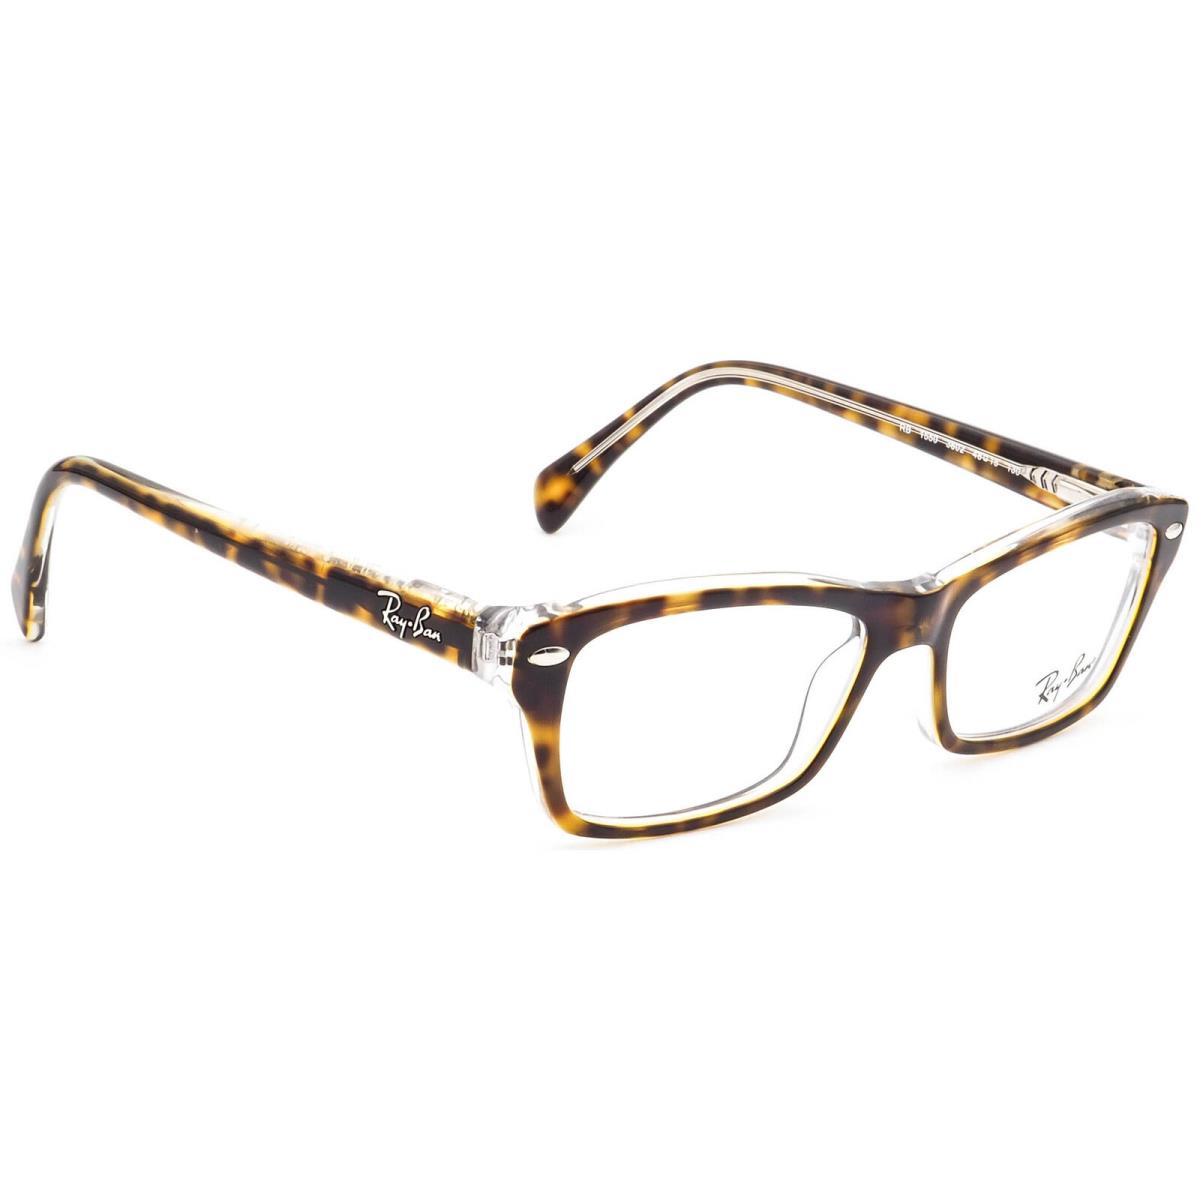 Ray-ban Small Eyeglasses RB 1550 3602 Junior Tortoise/clear Frame 48 15 130